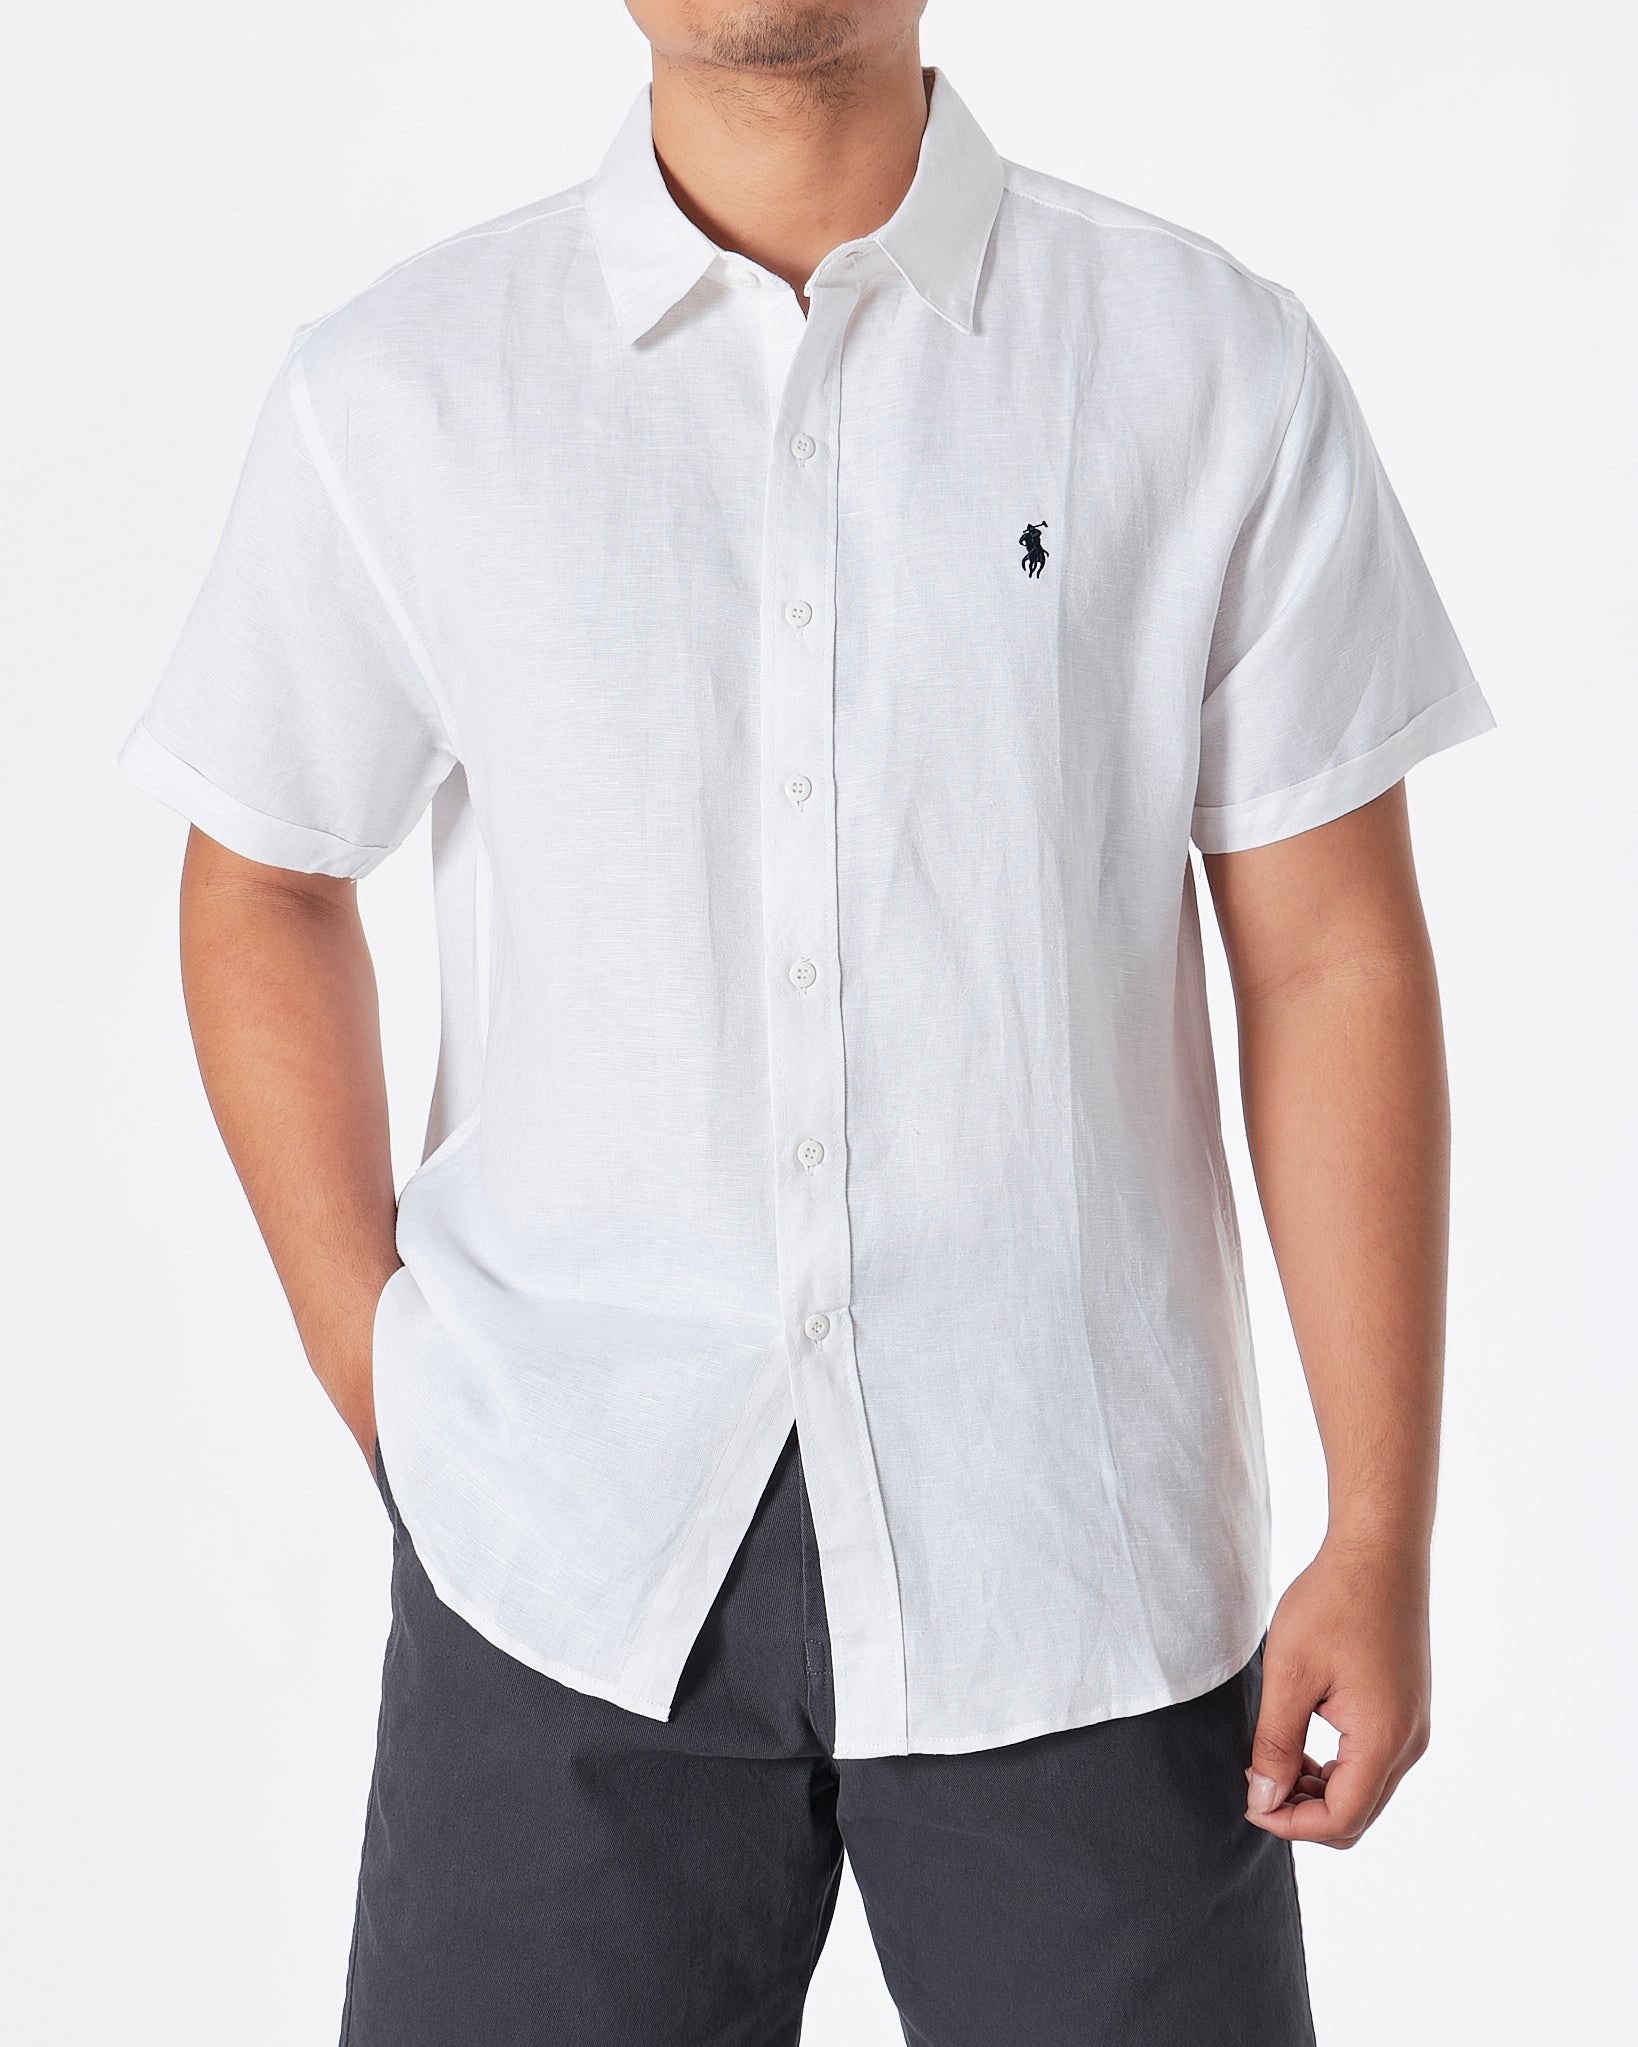 MOI OUTFIT-RL Cotton Men White Shirts Short Sleeve 28.90